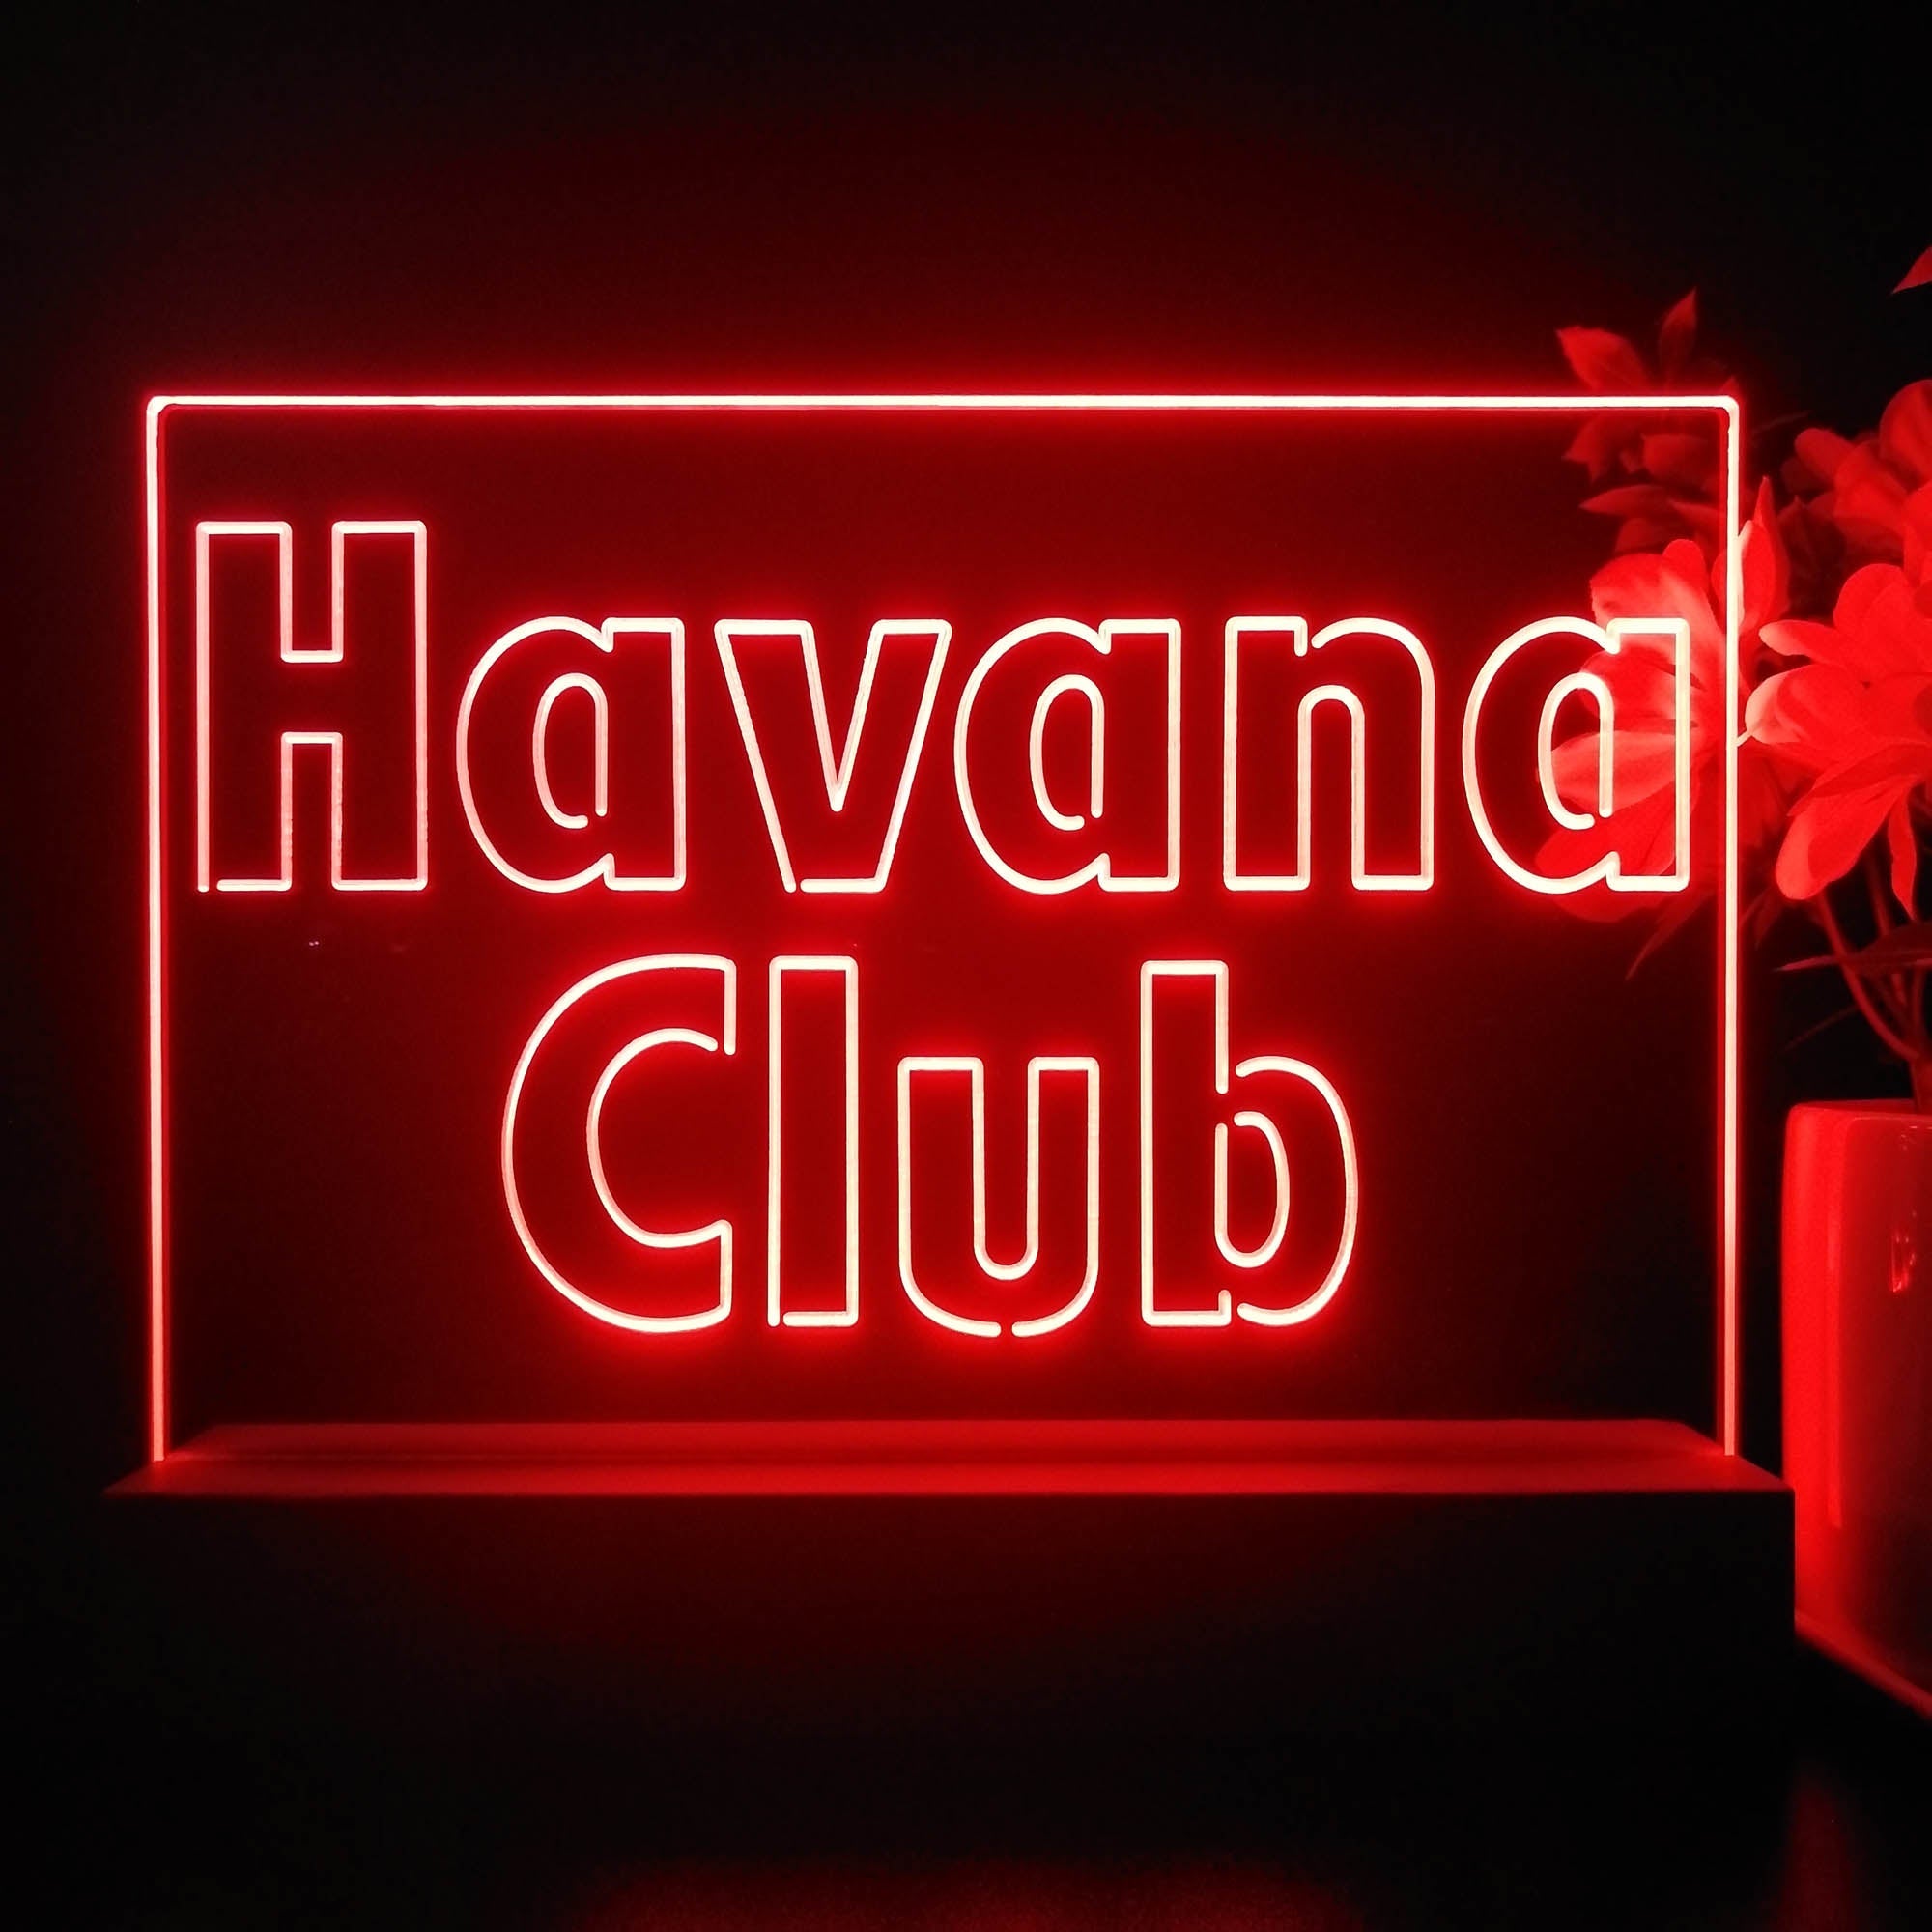 Havanas Club Rum Neon Sign Pub Bar Decor Lamp